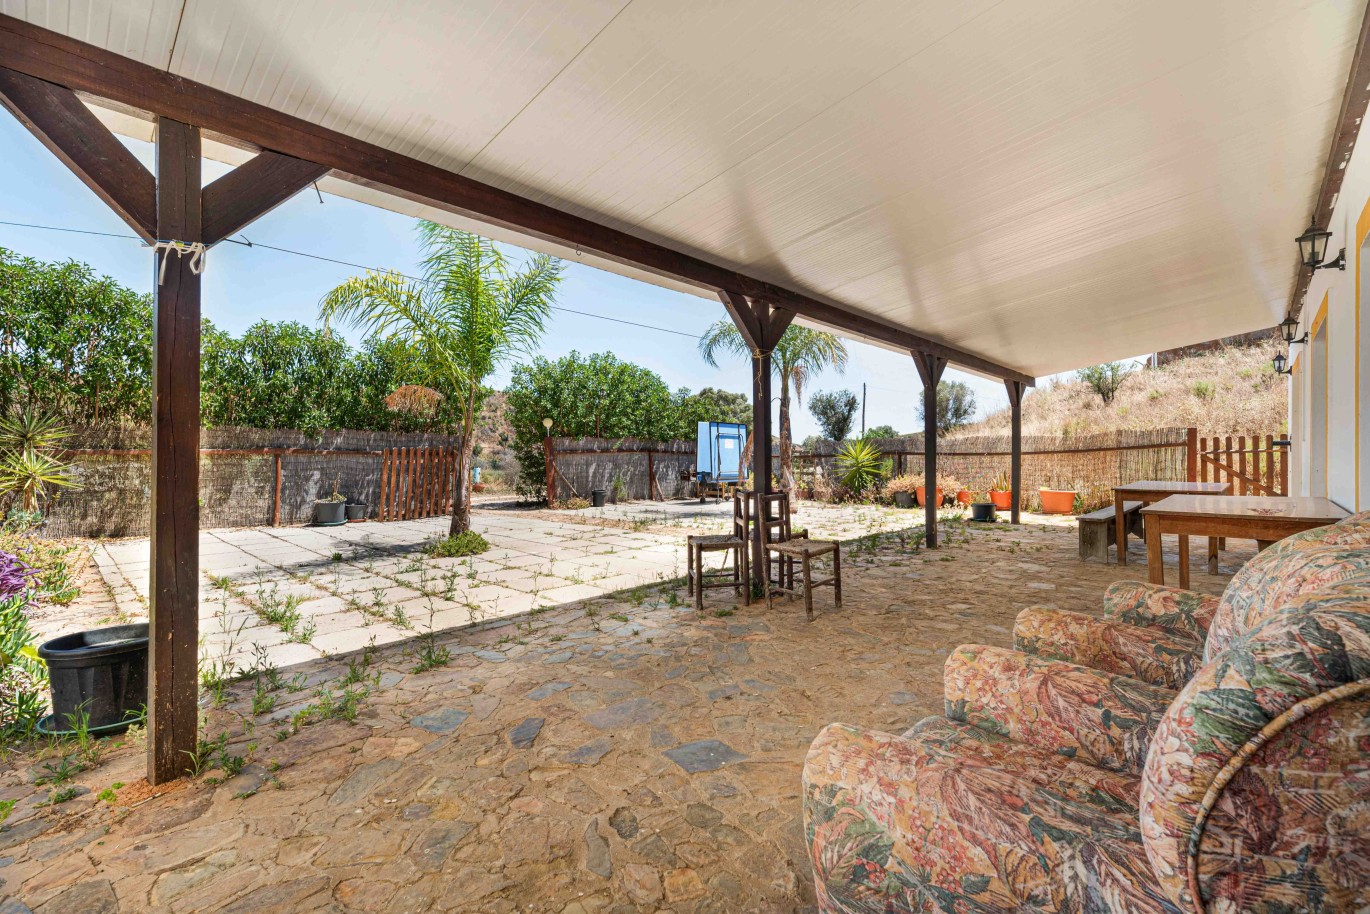 9 Bedroom Country Villa à vendre à Pereira, Algarve_231616